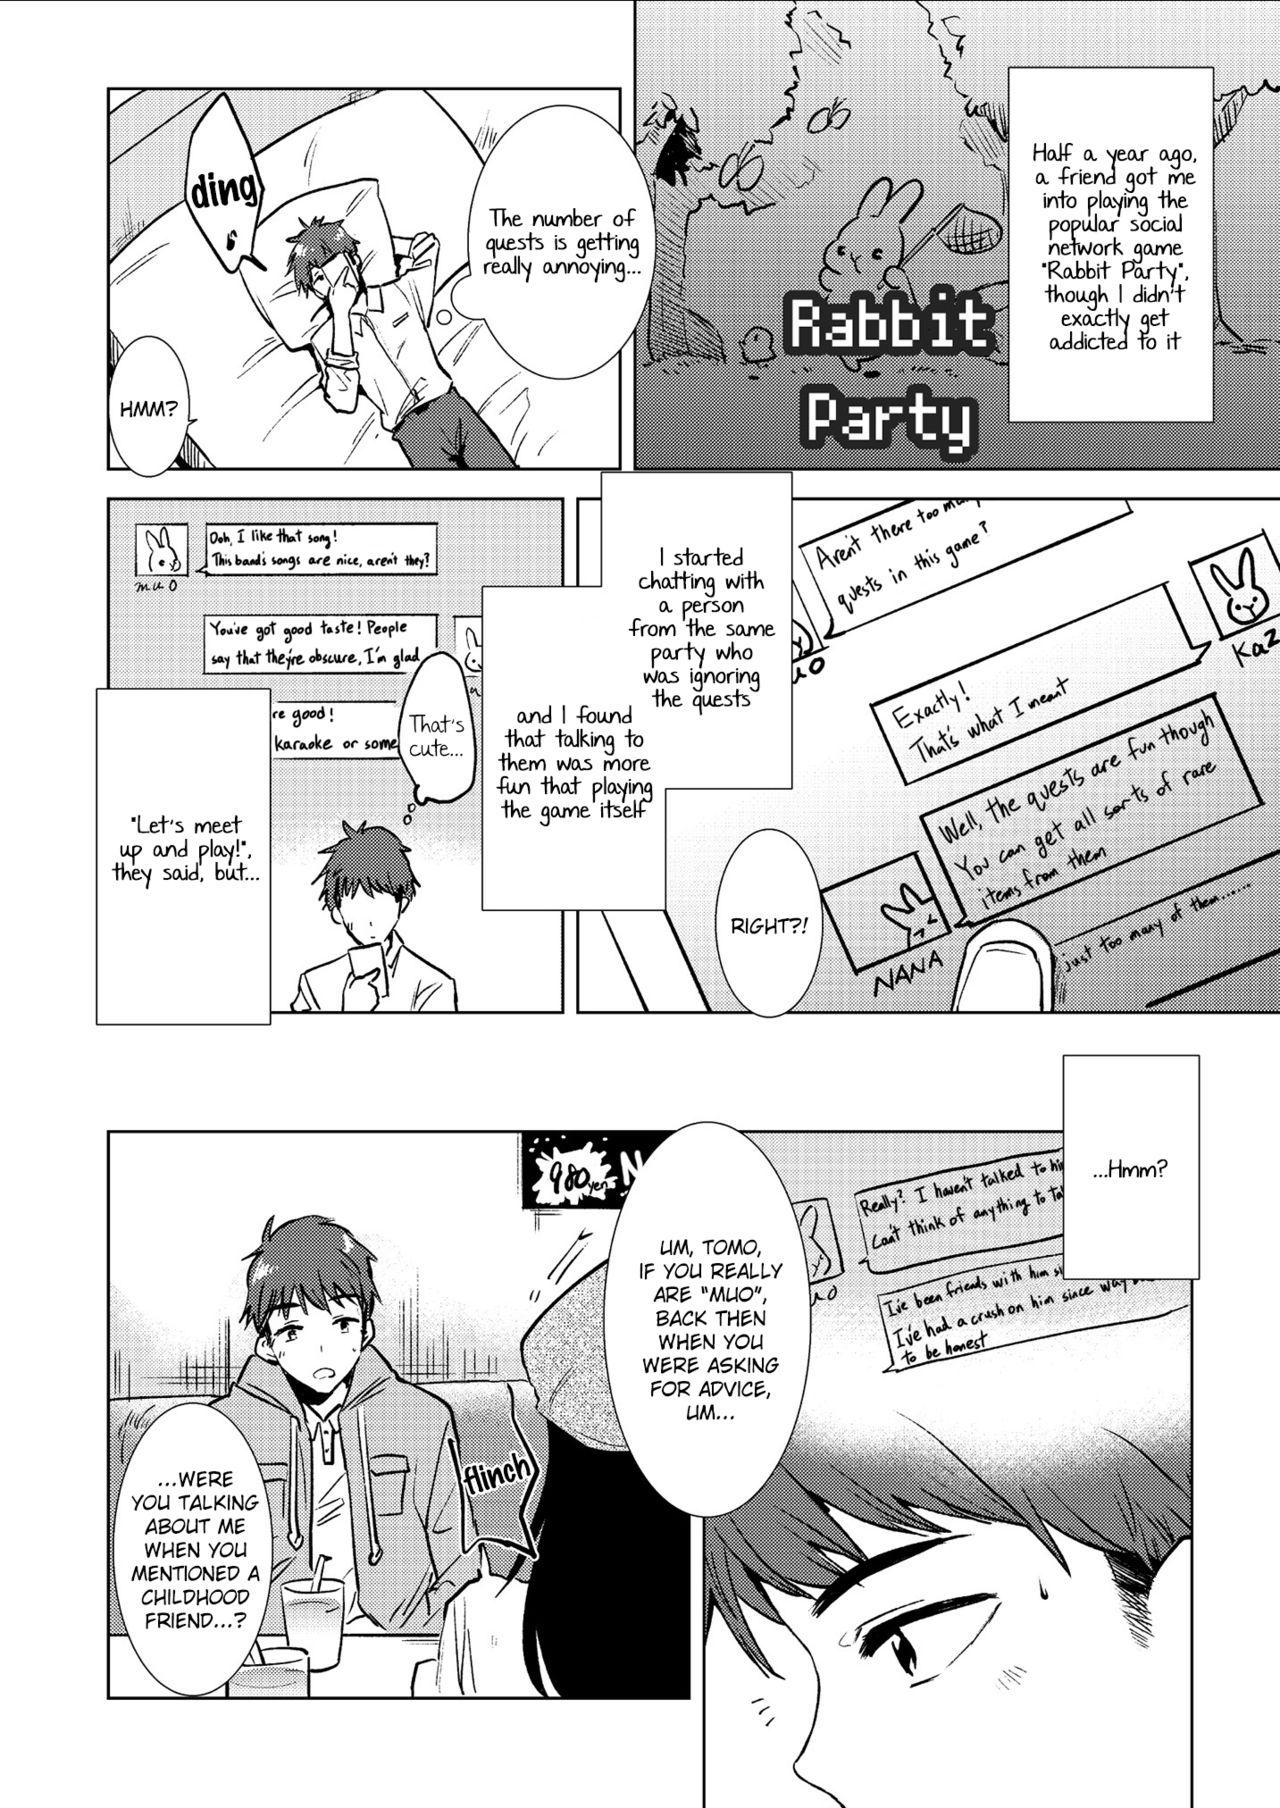 Load RabbitPartyoffline - Original New - Page 2